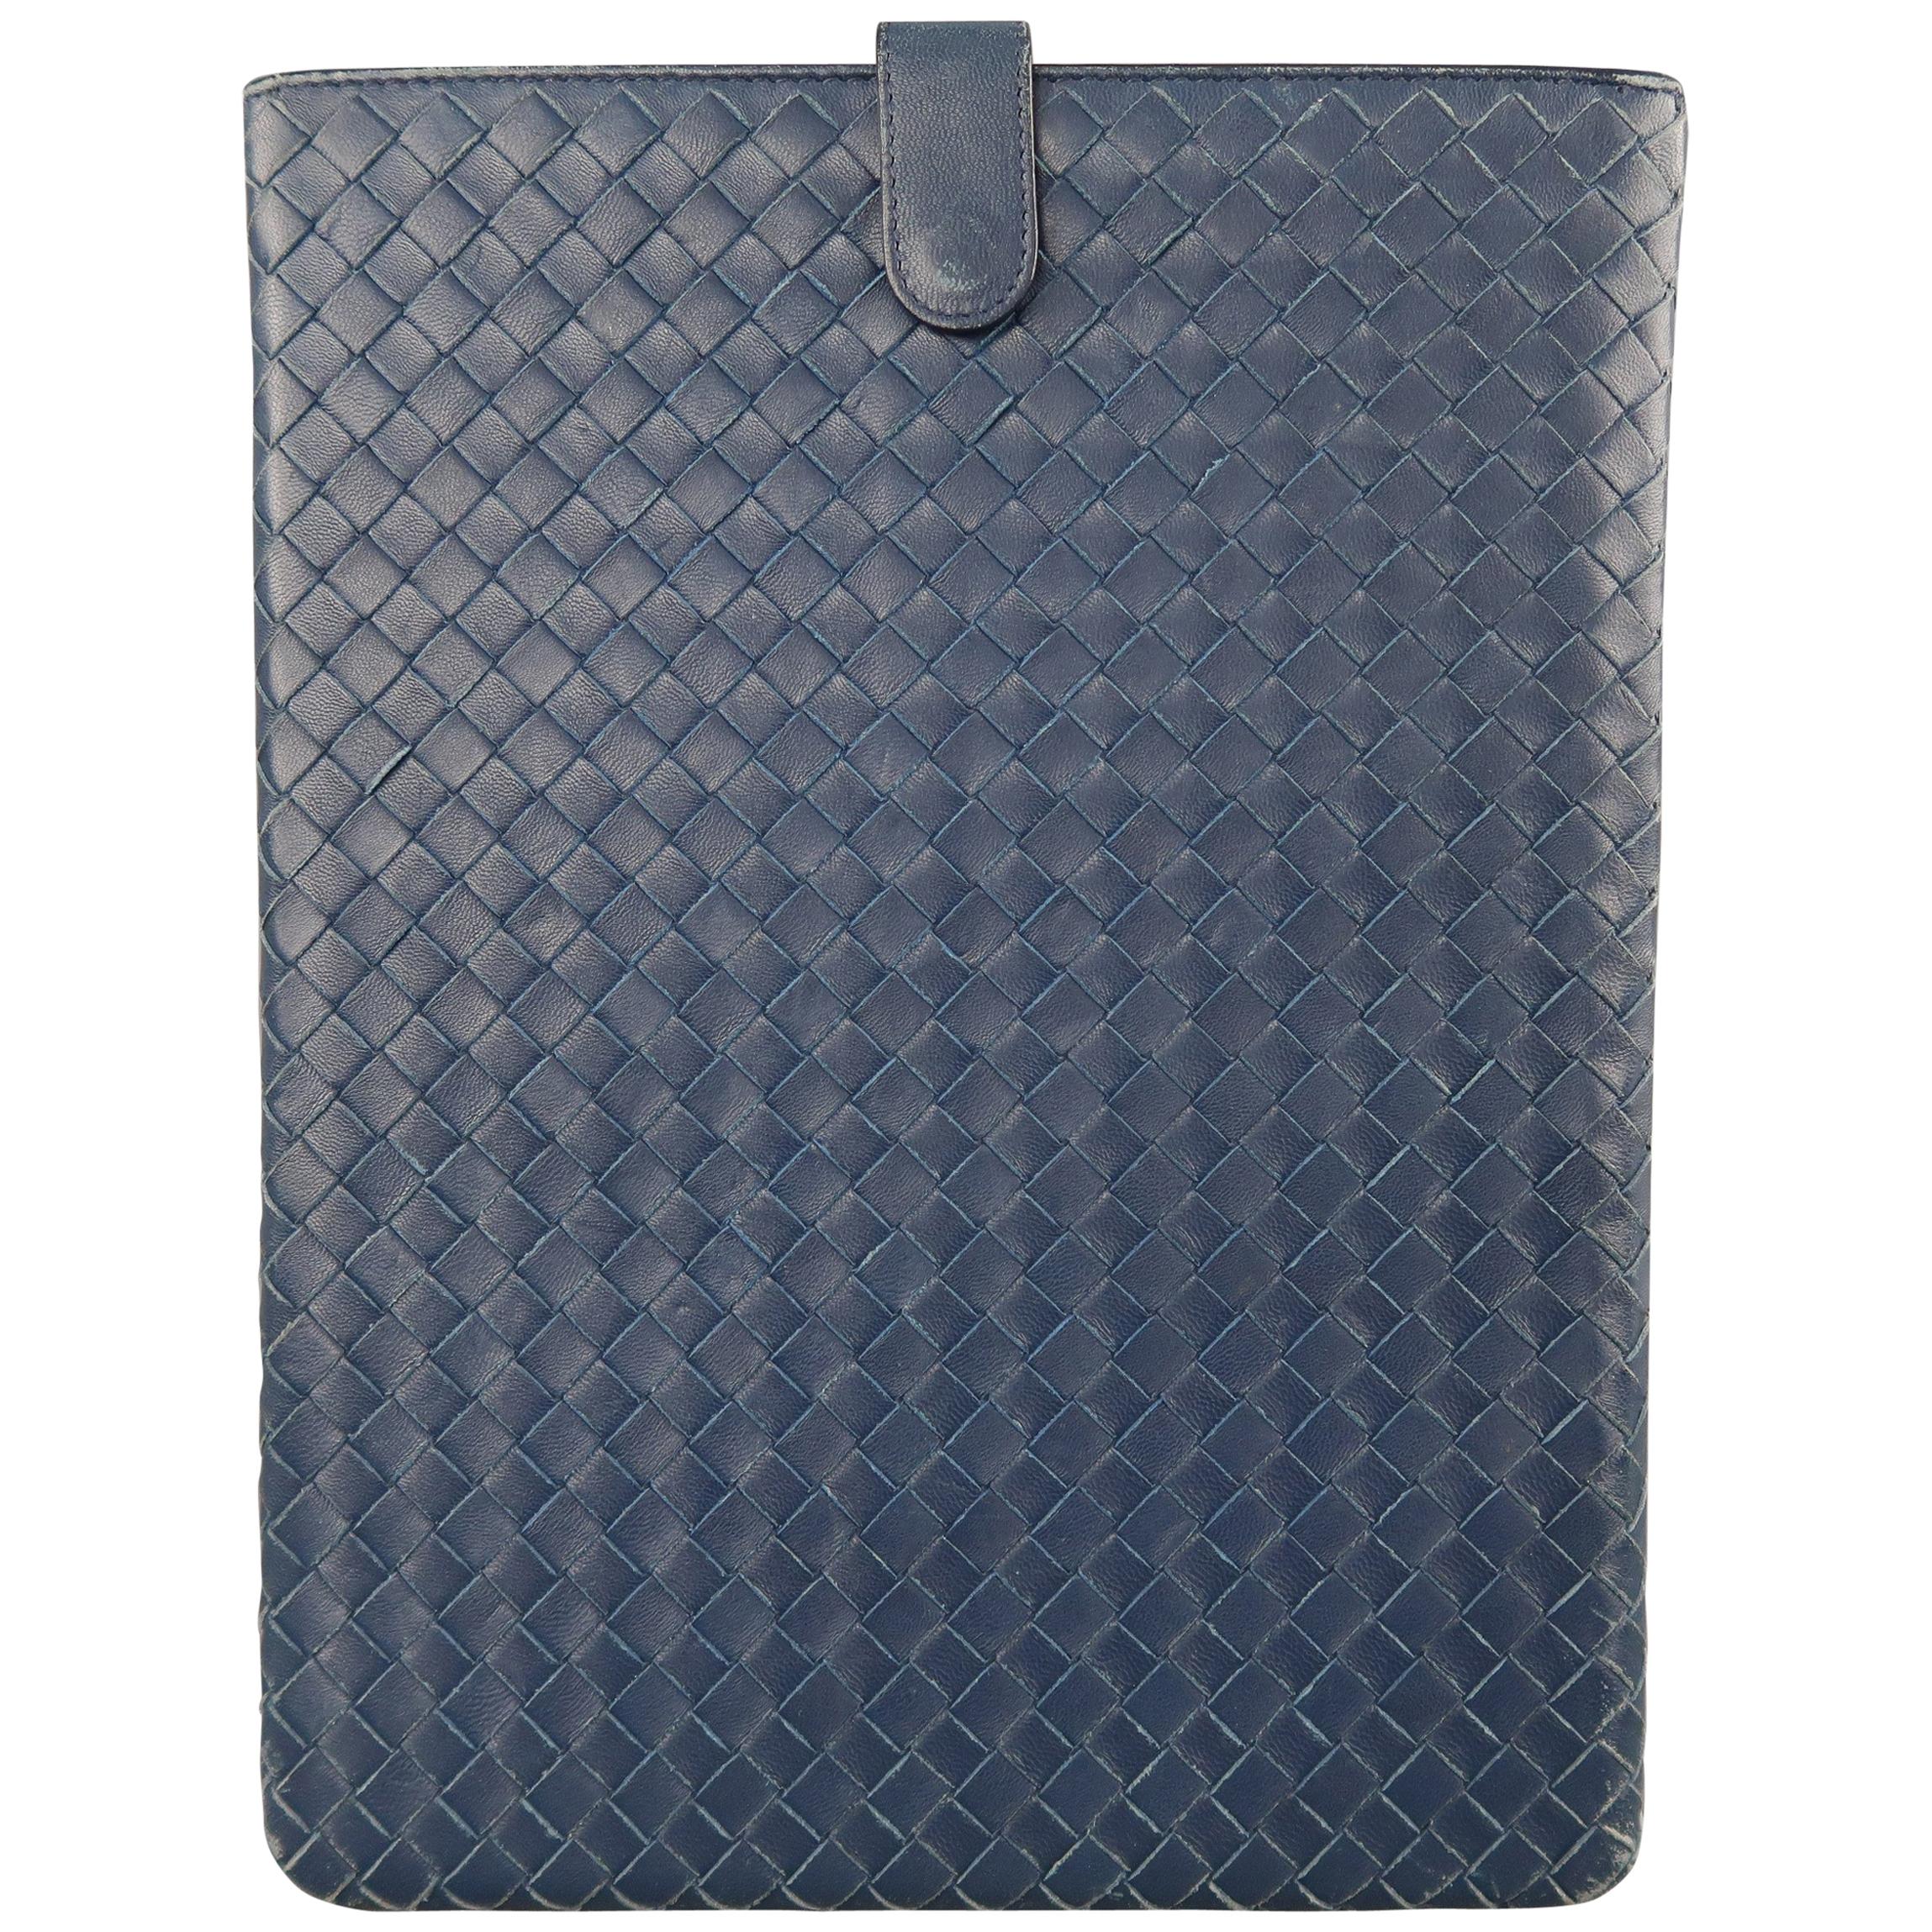 BOTTEGA VENETA Navy Woven Intrecciato Leather iPad Tablet Case